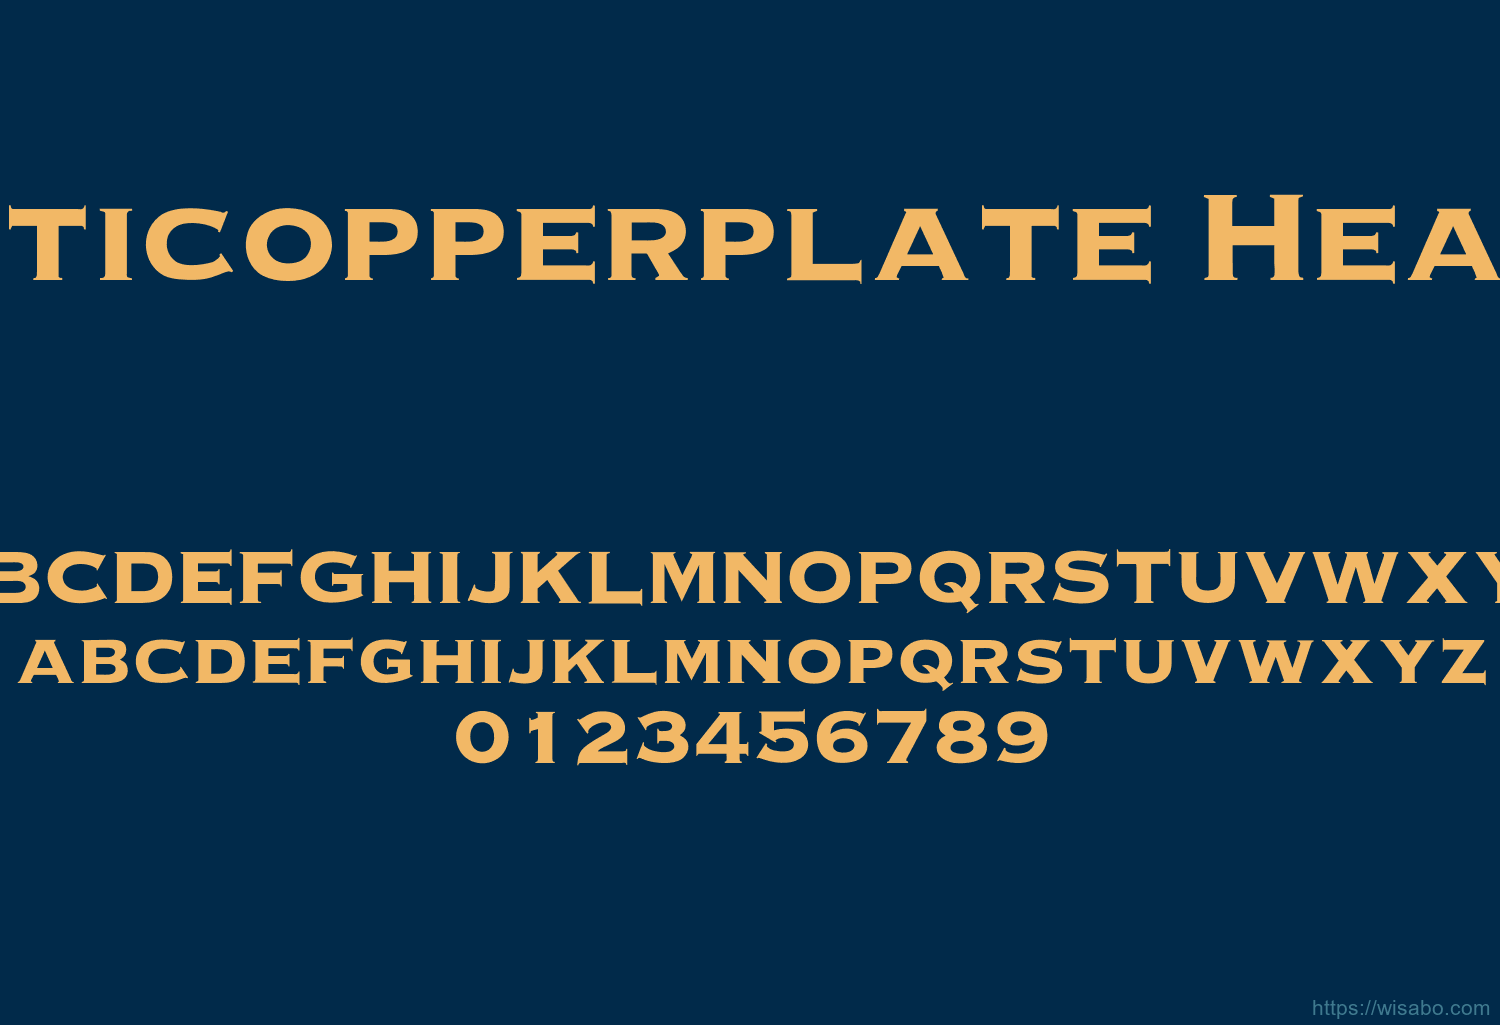 Opticopperplate Heavy